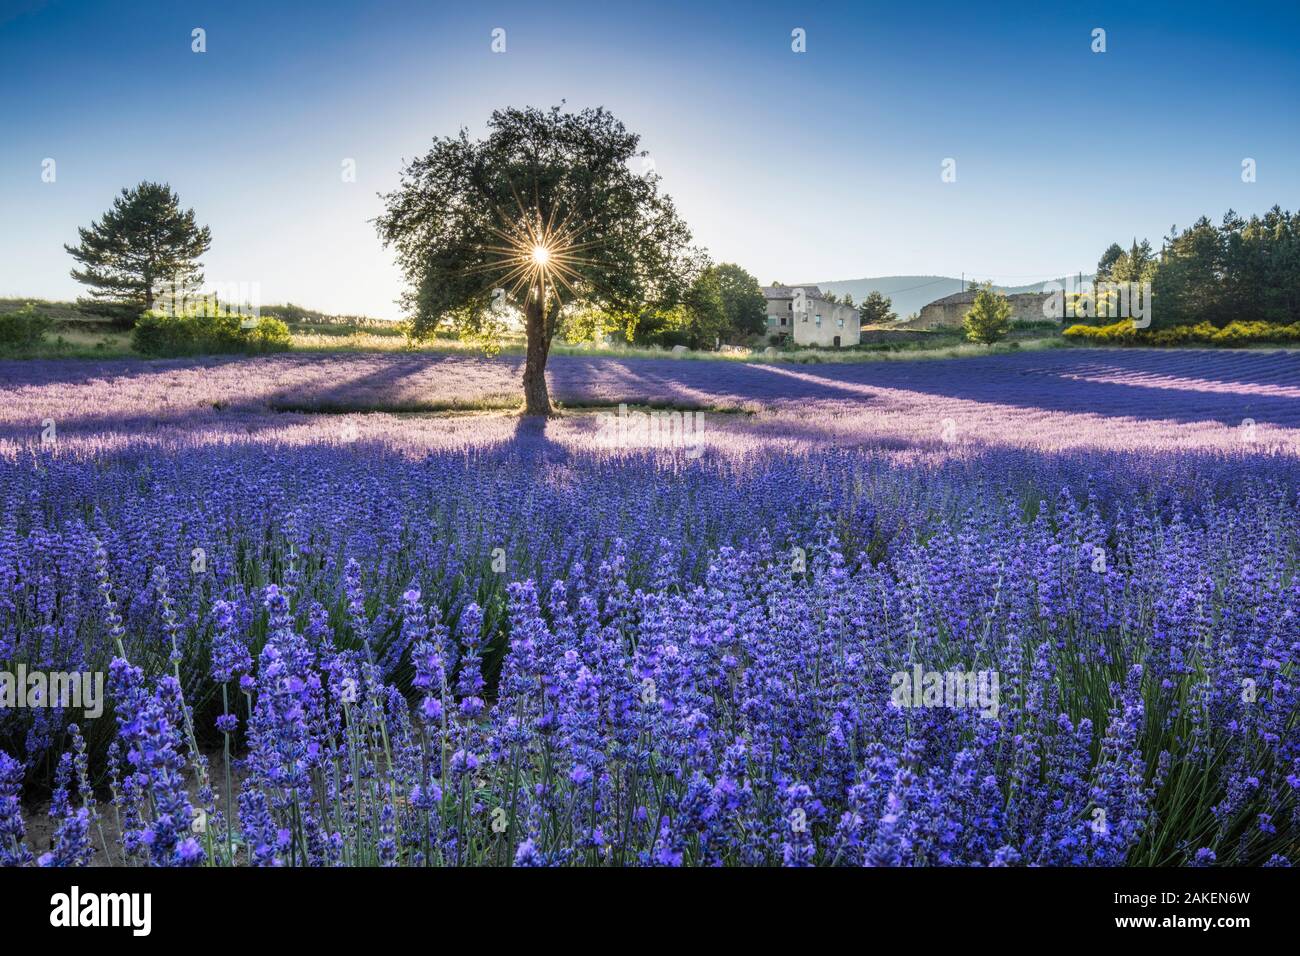 Lavender fields at sunset, Aurel, Provence, France, July 2016. Stock Photo